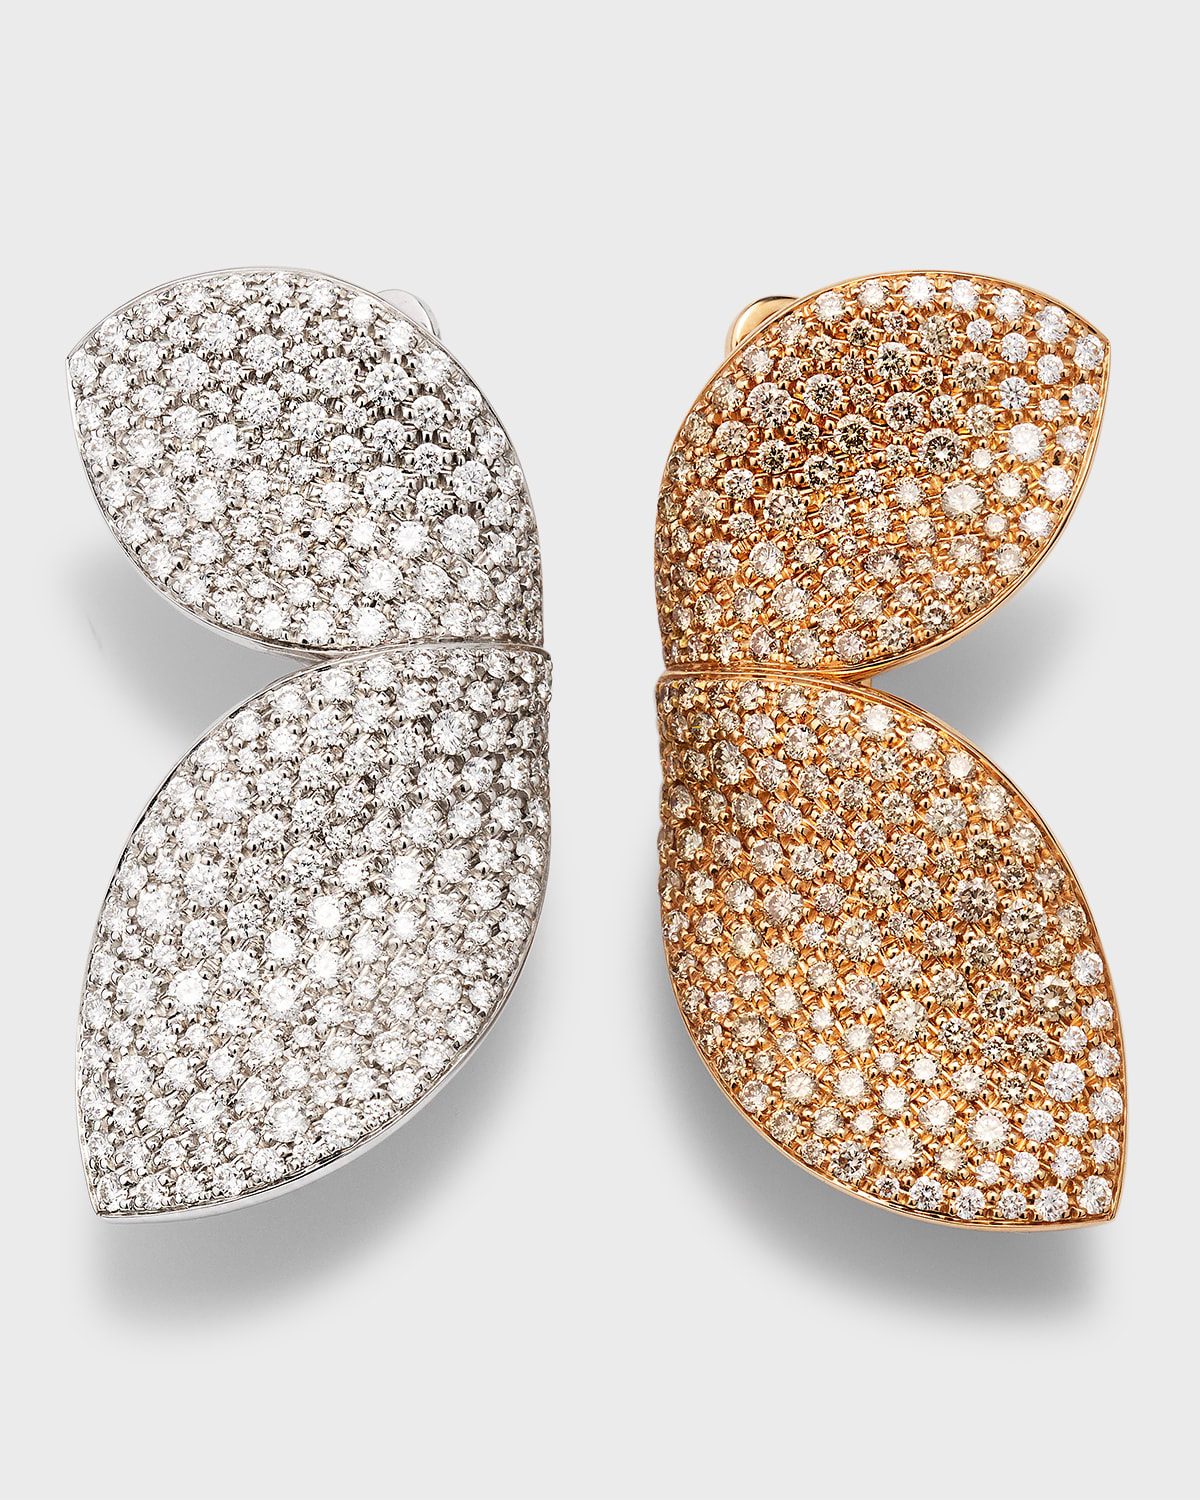 Giardini Segreti 18K White Gold and Red Gold Diamond Earrings